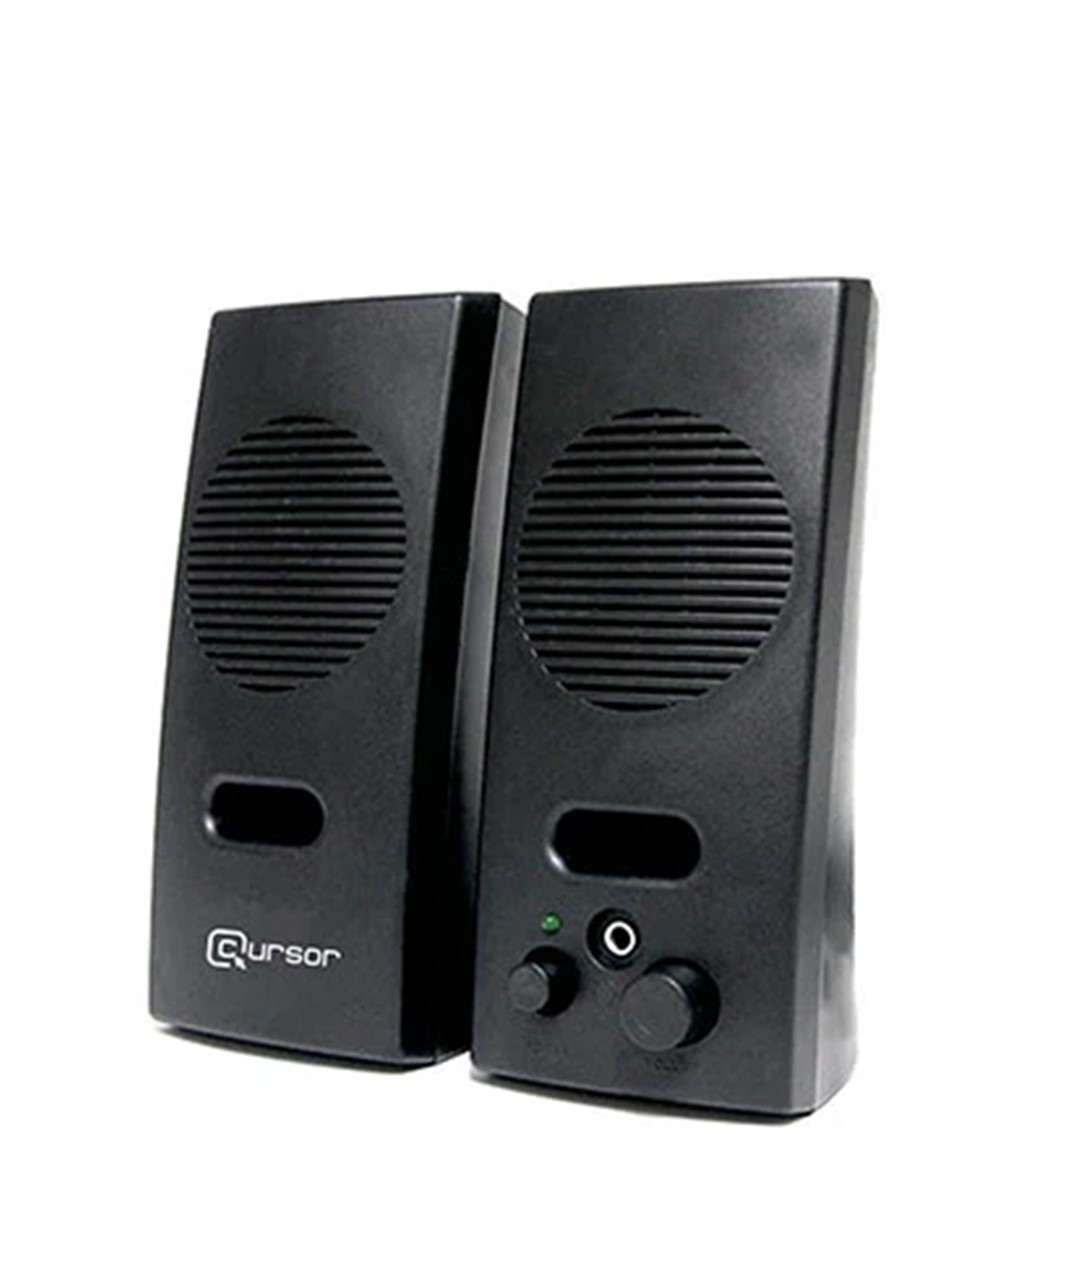 Cursor PS-370 Multimedia Speakers